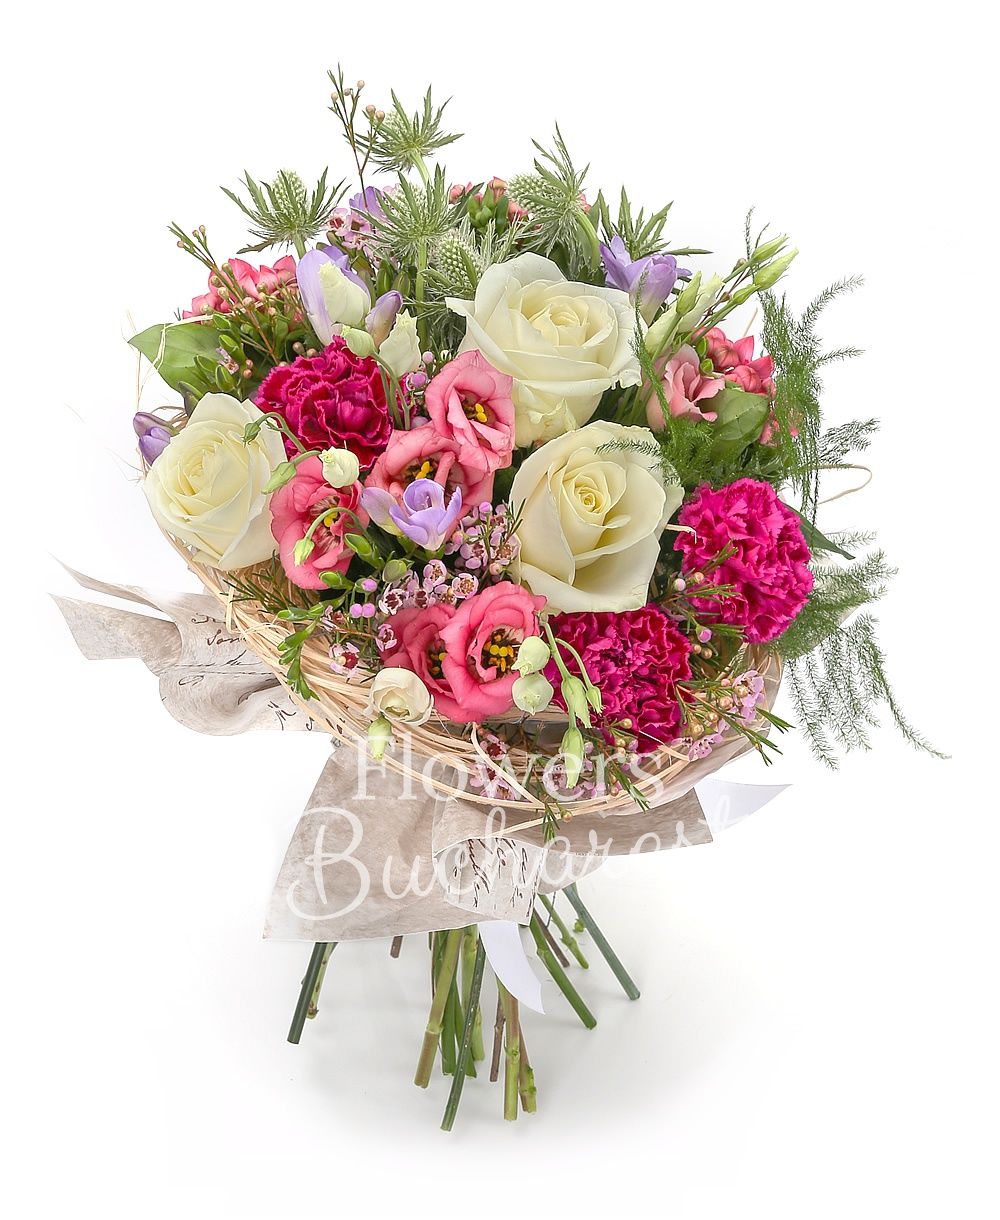 3 white roses, 5 pink lisianthus, 3 white eryngium, 5 purple freesias, 3 cyclam carnations, 3 pink bouvardia, waxflower, greenery